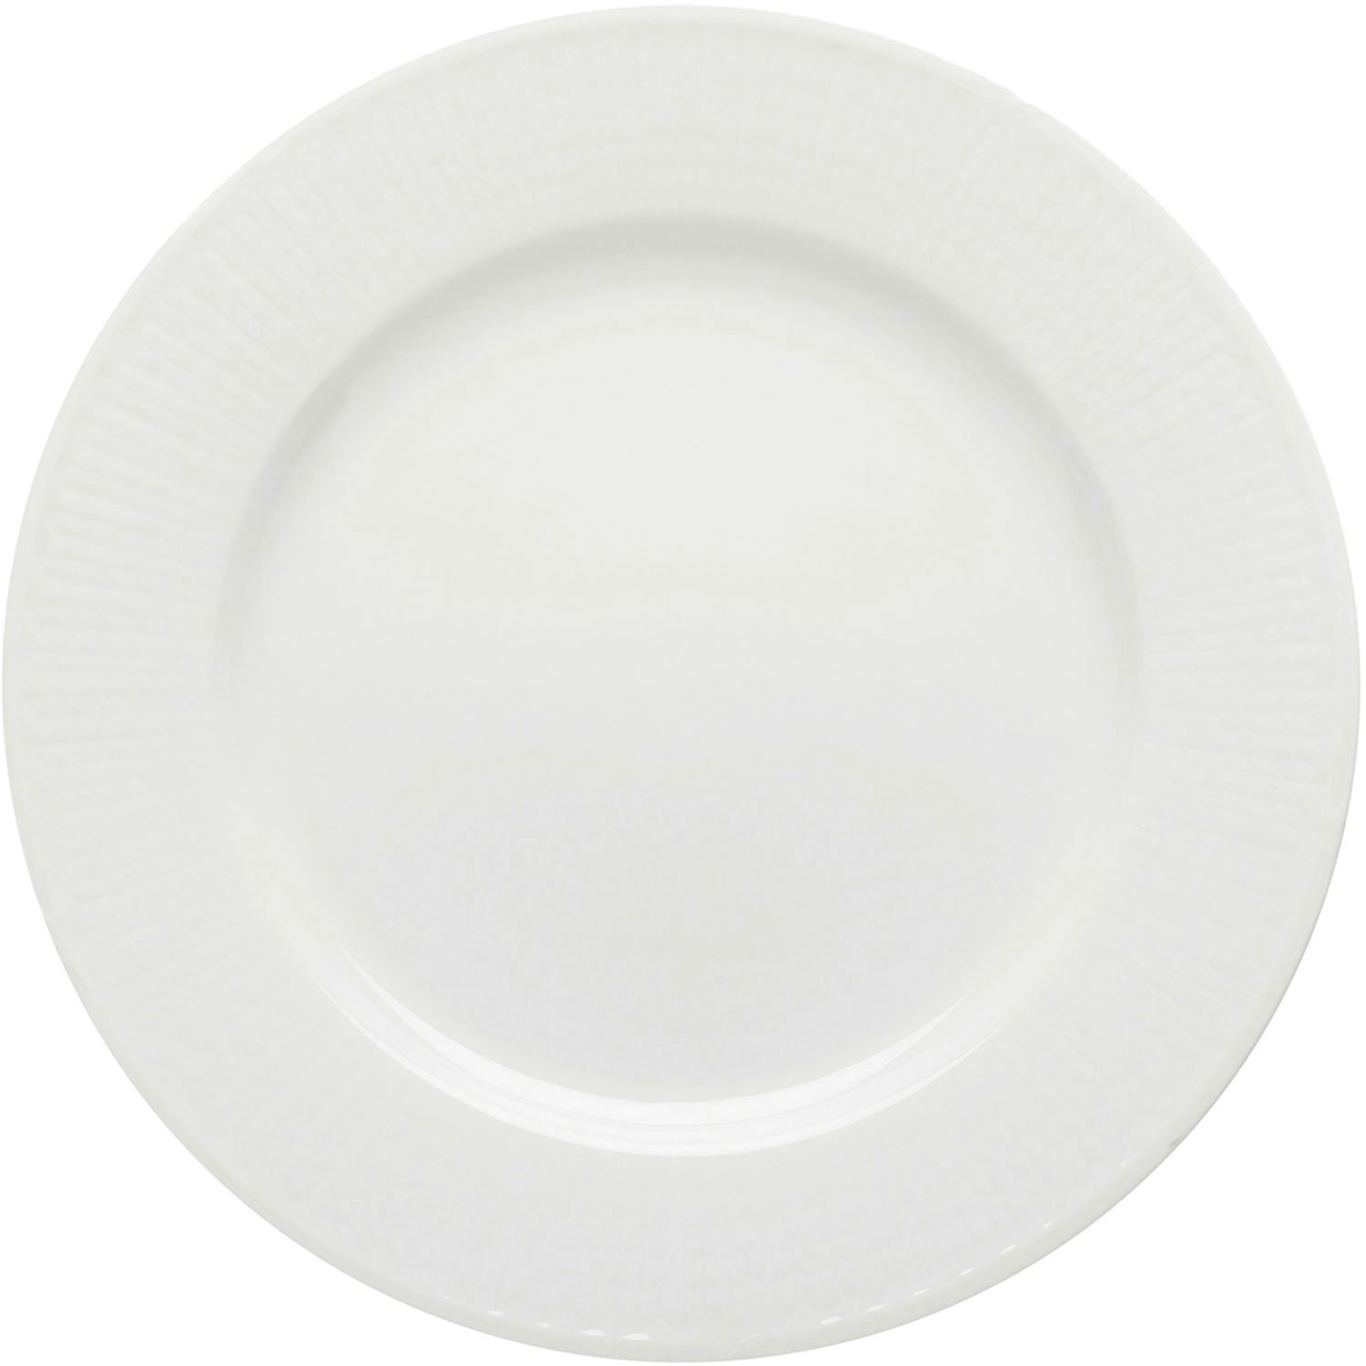 Swedish Grace Plate 21 cm, Snow (White)